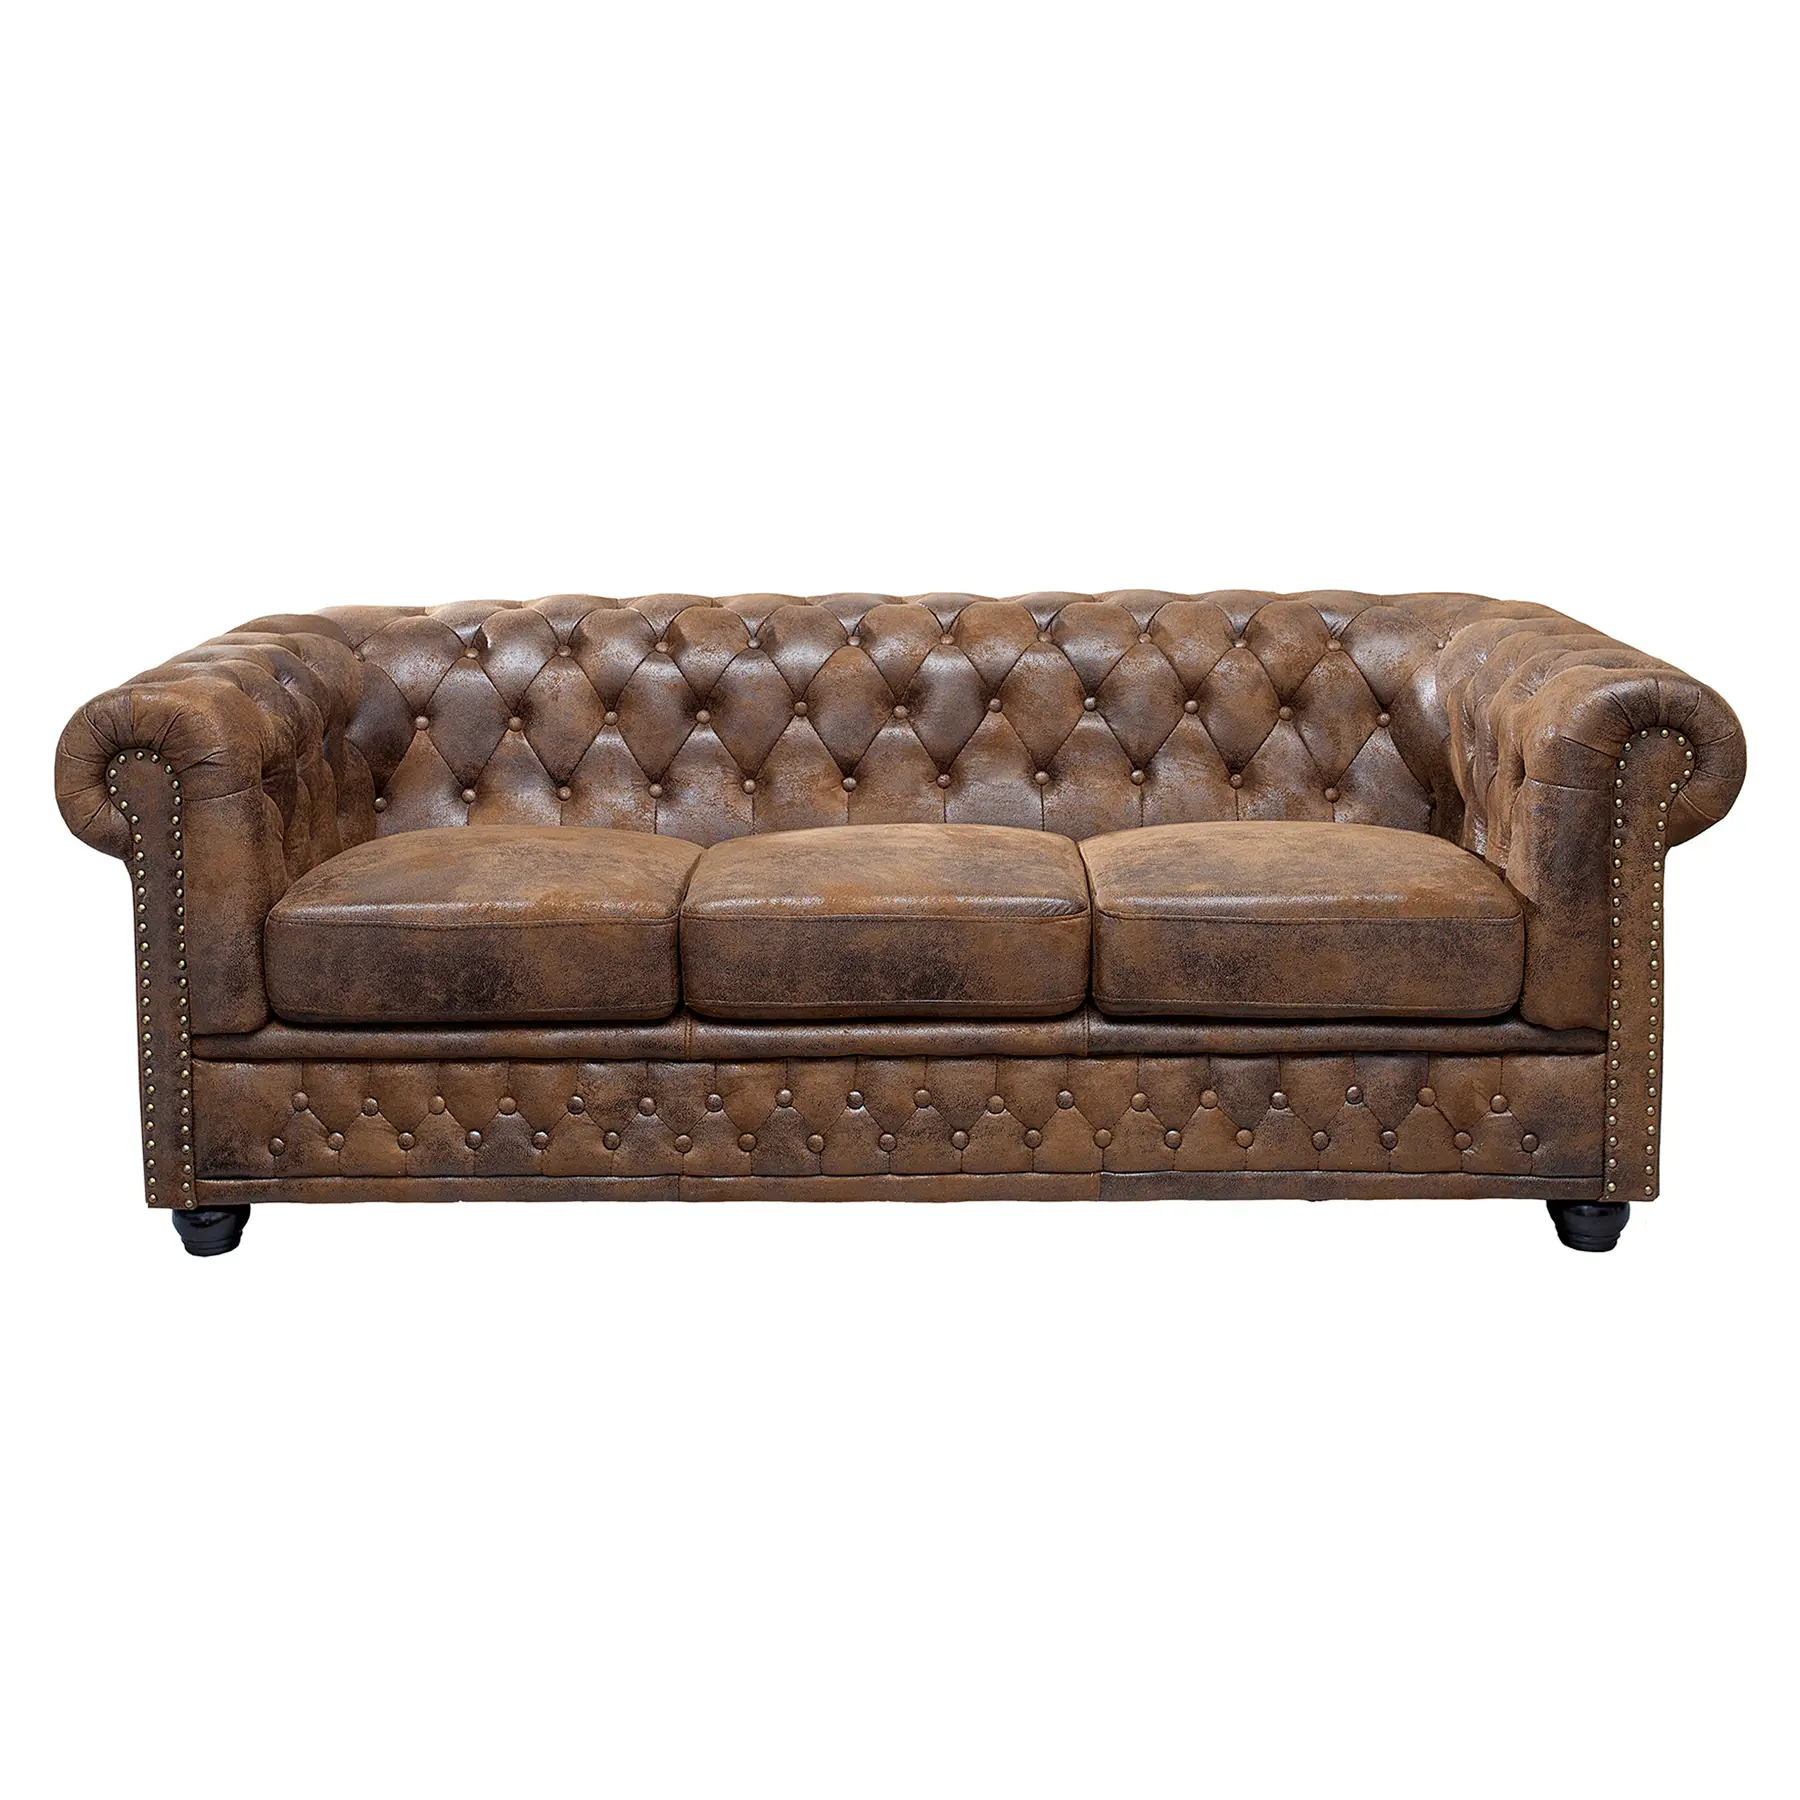 3er Sofa antik 205cm braun